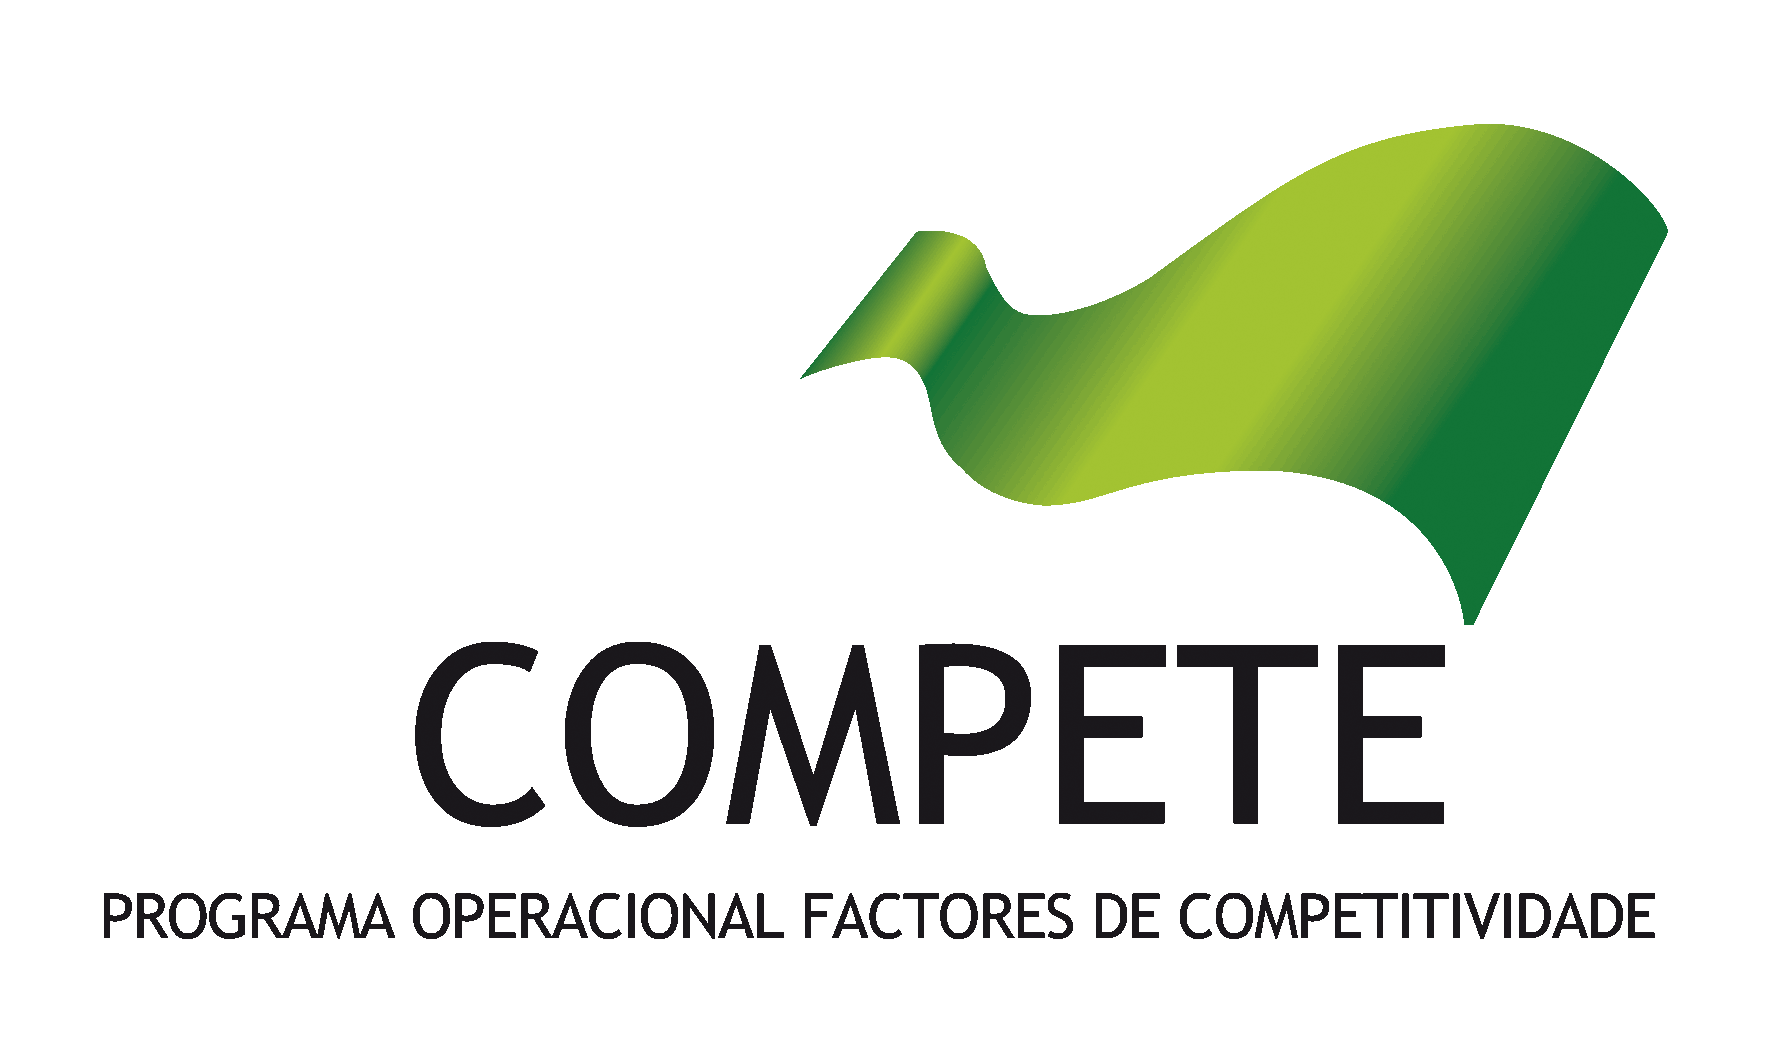 COMPETE - Programa Operacional Factores de Competitividade